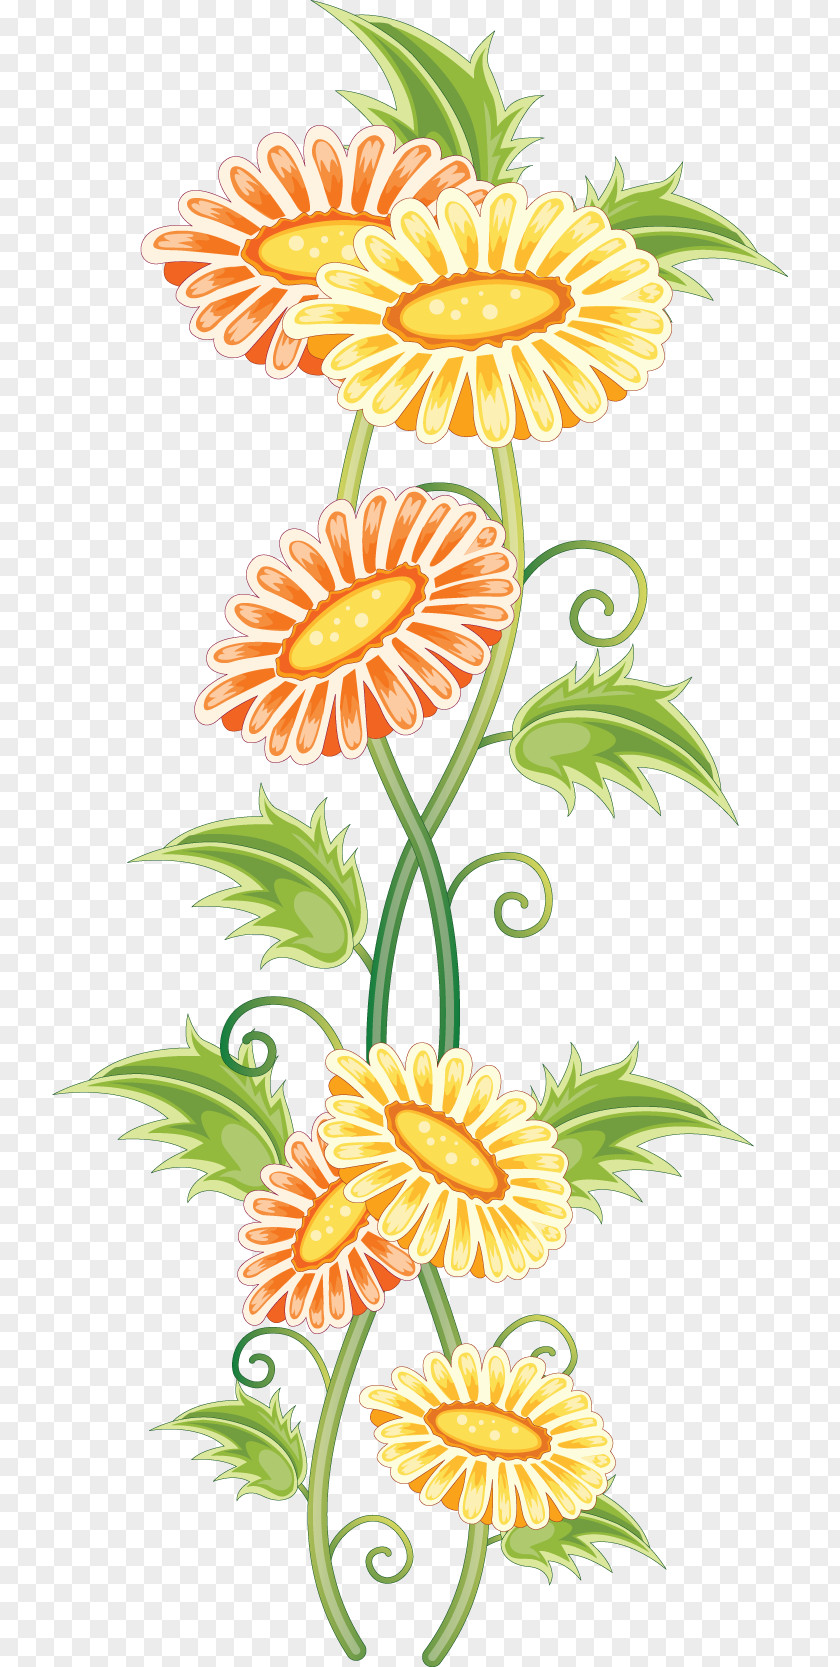 Green Floral Flower Ornament Design Clip Art PNG